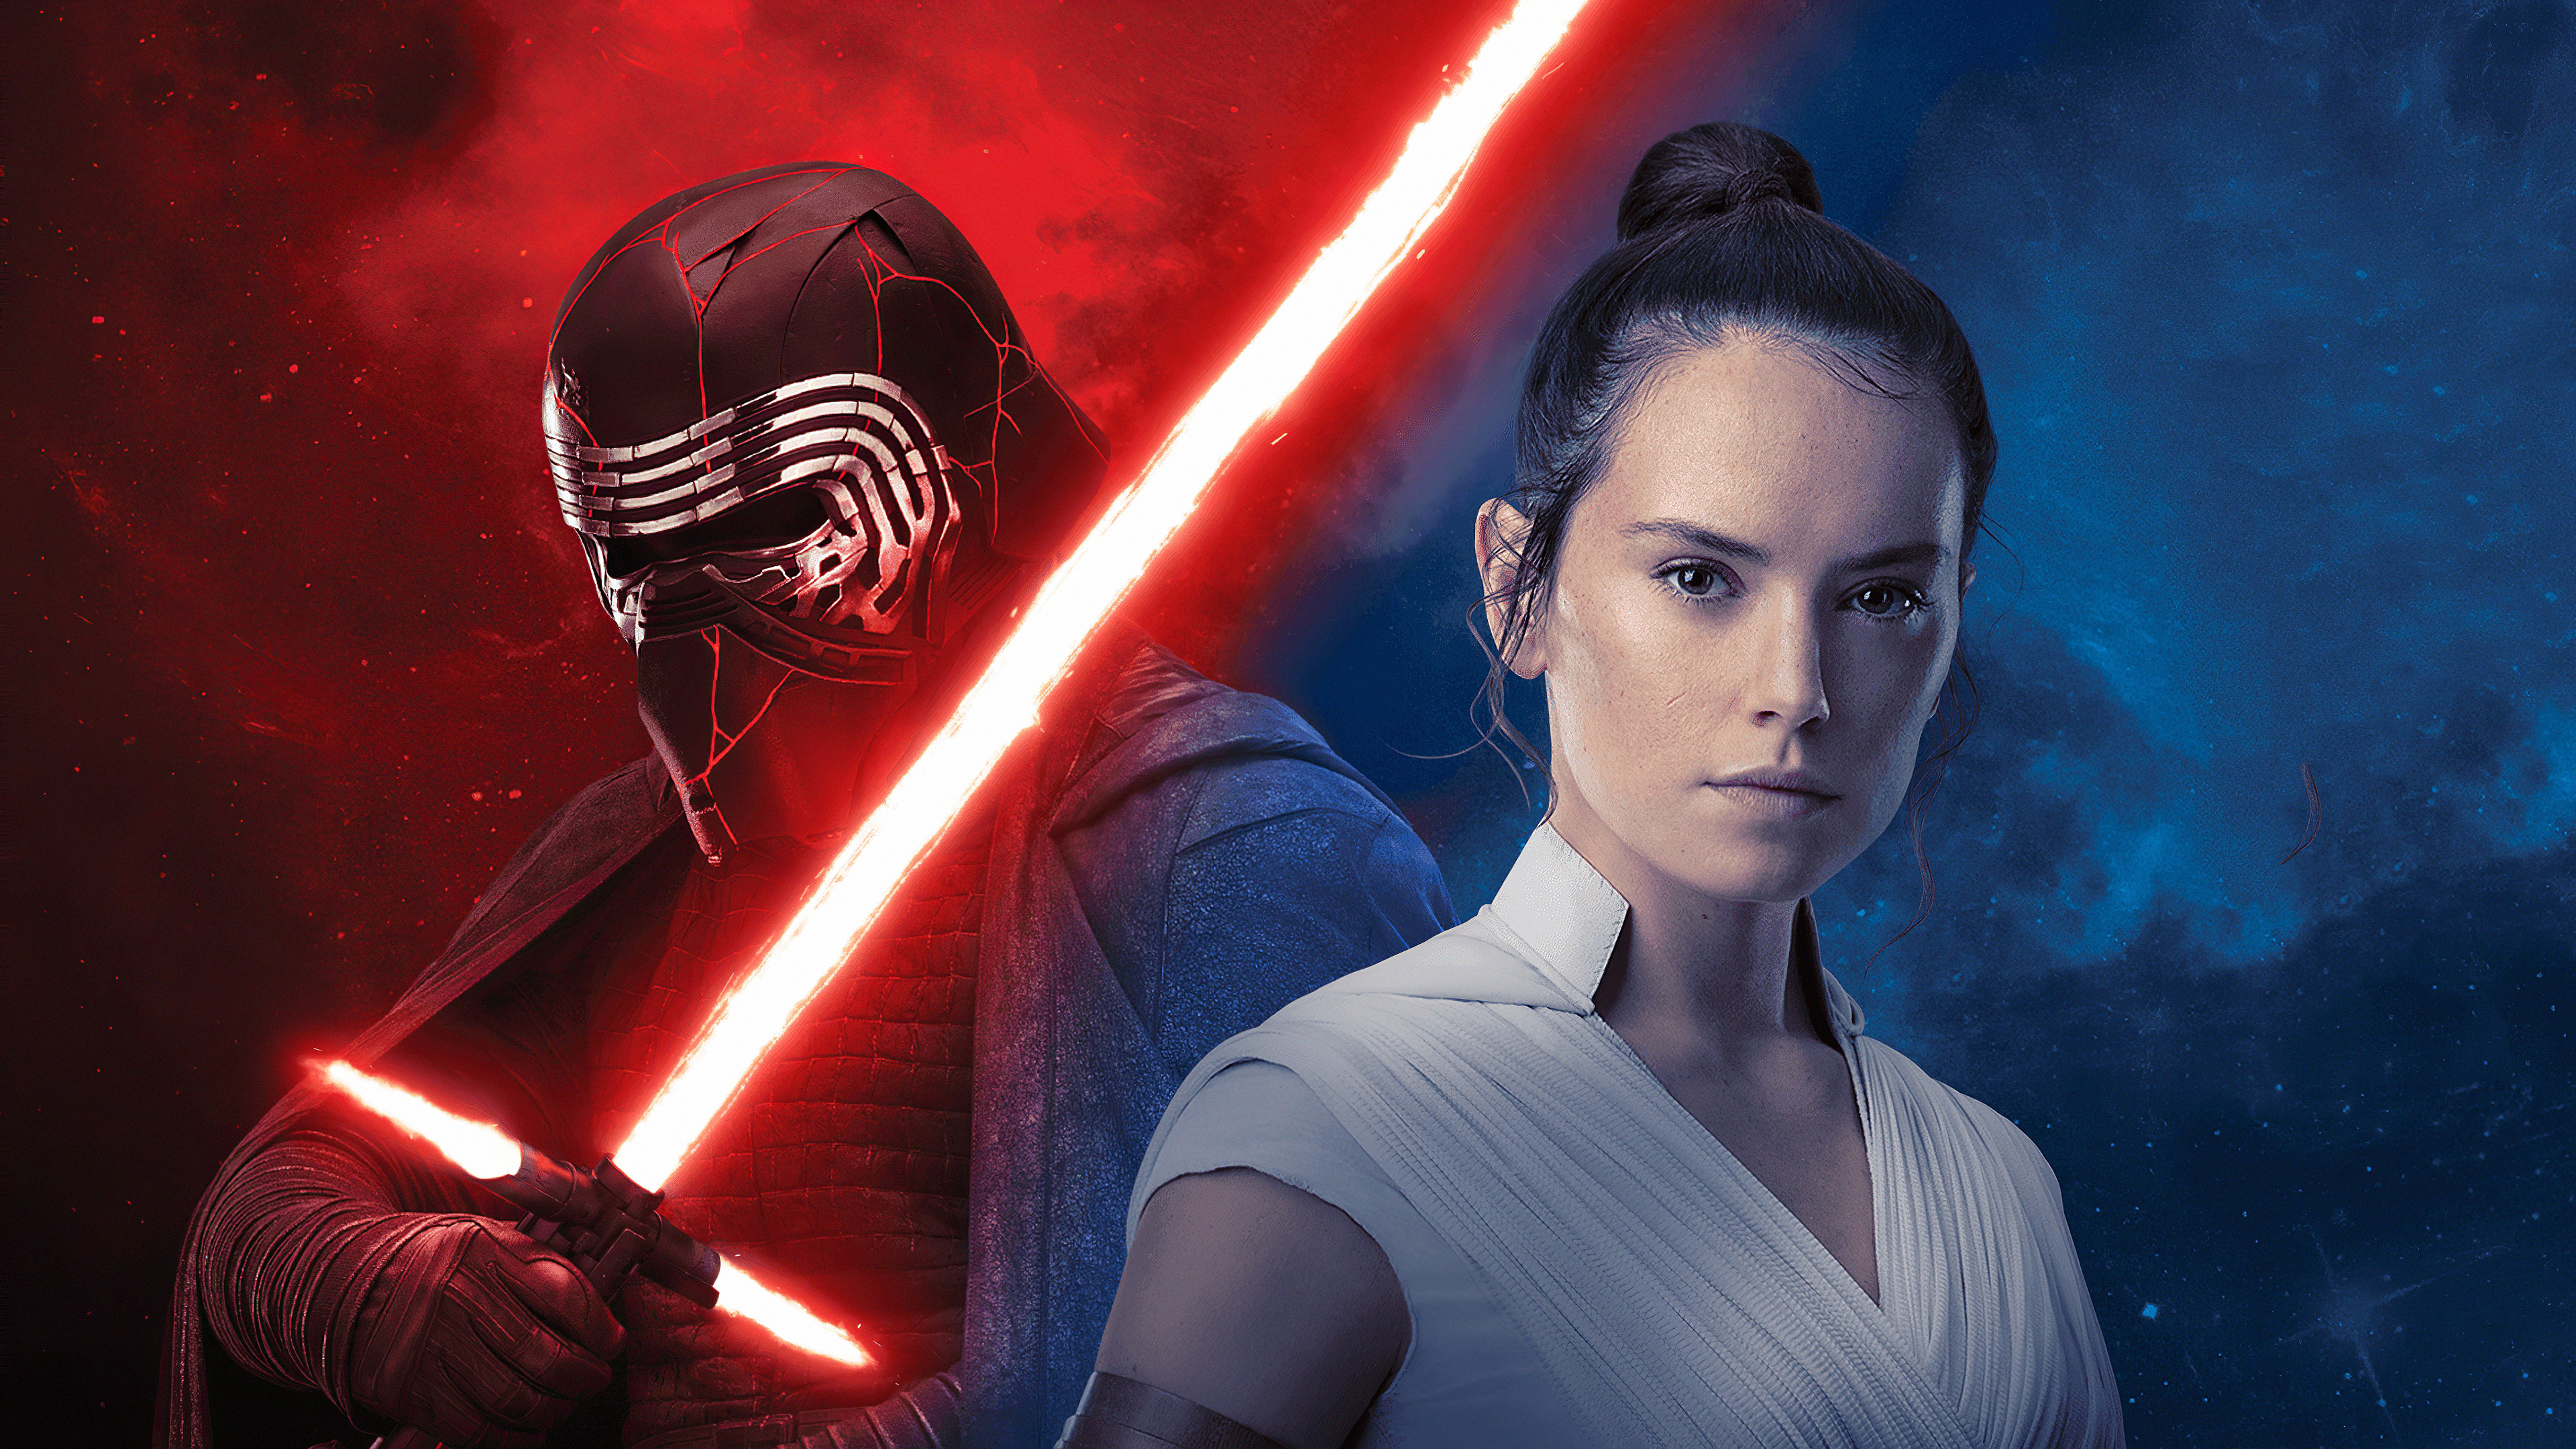 Star Wars The Rise Of Skywalker 4k Ultra Hd Wallpaper Background Image 3840x2160